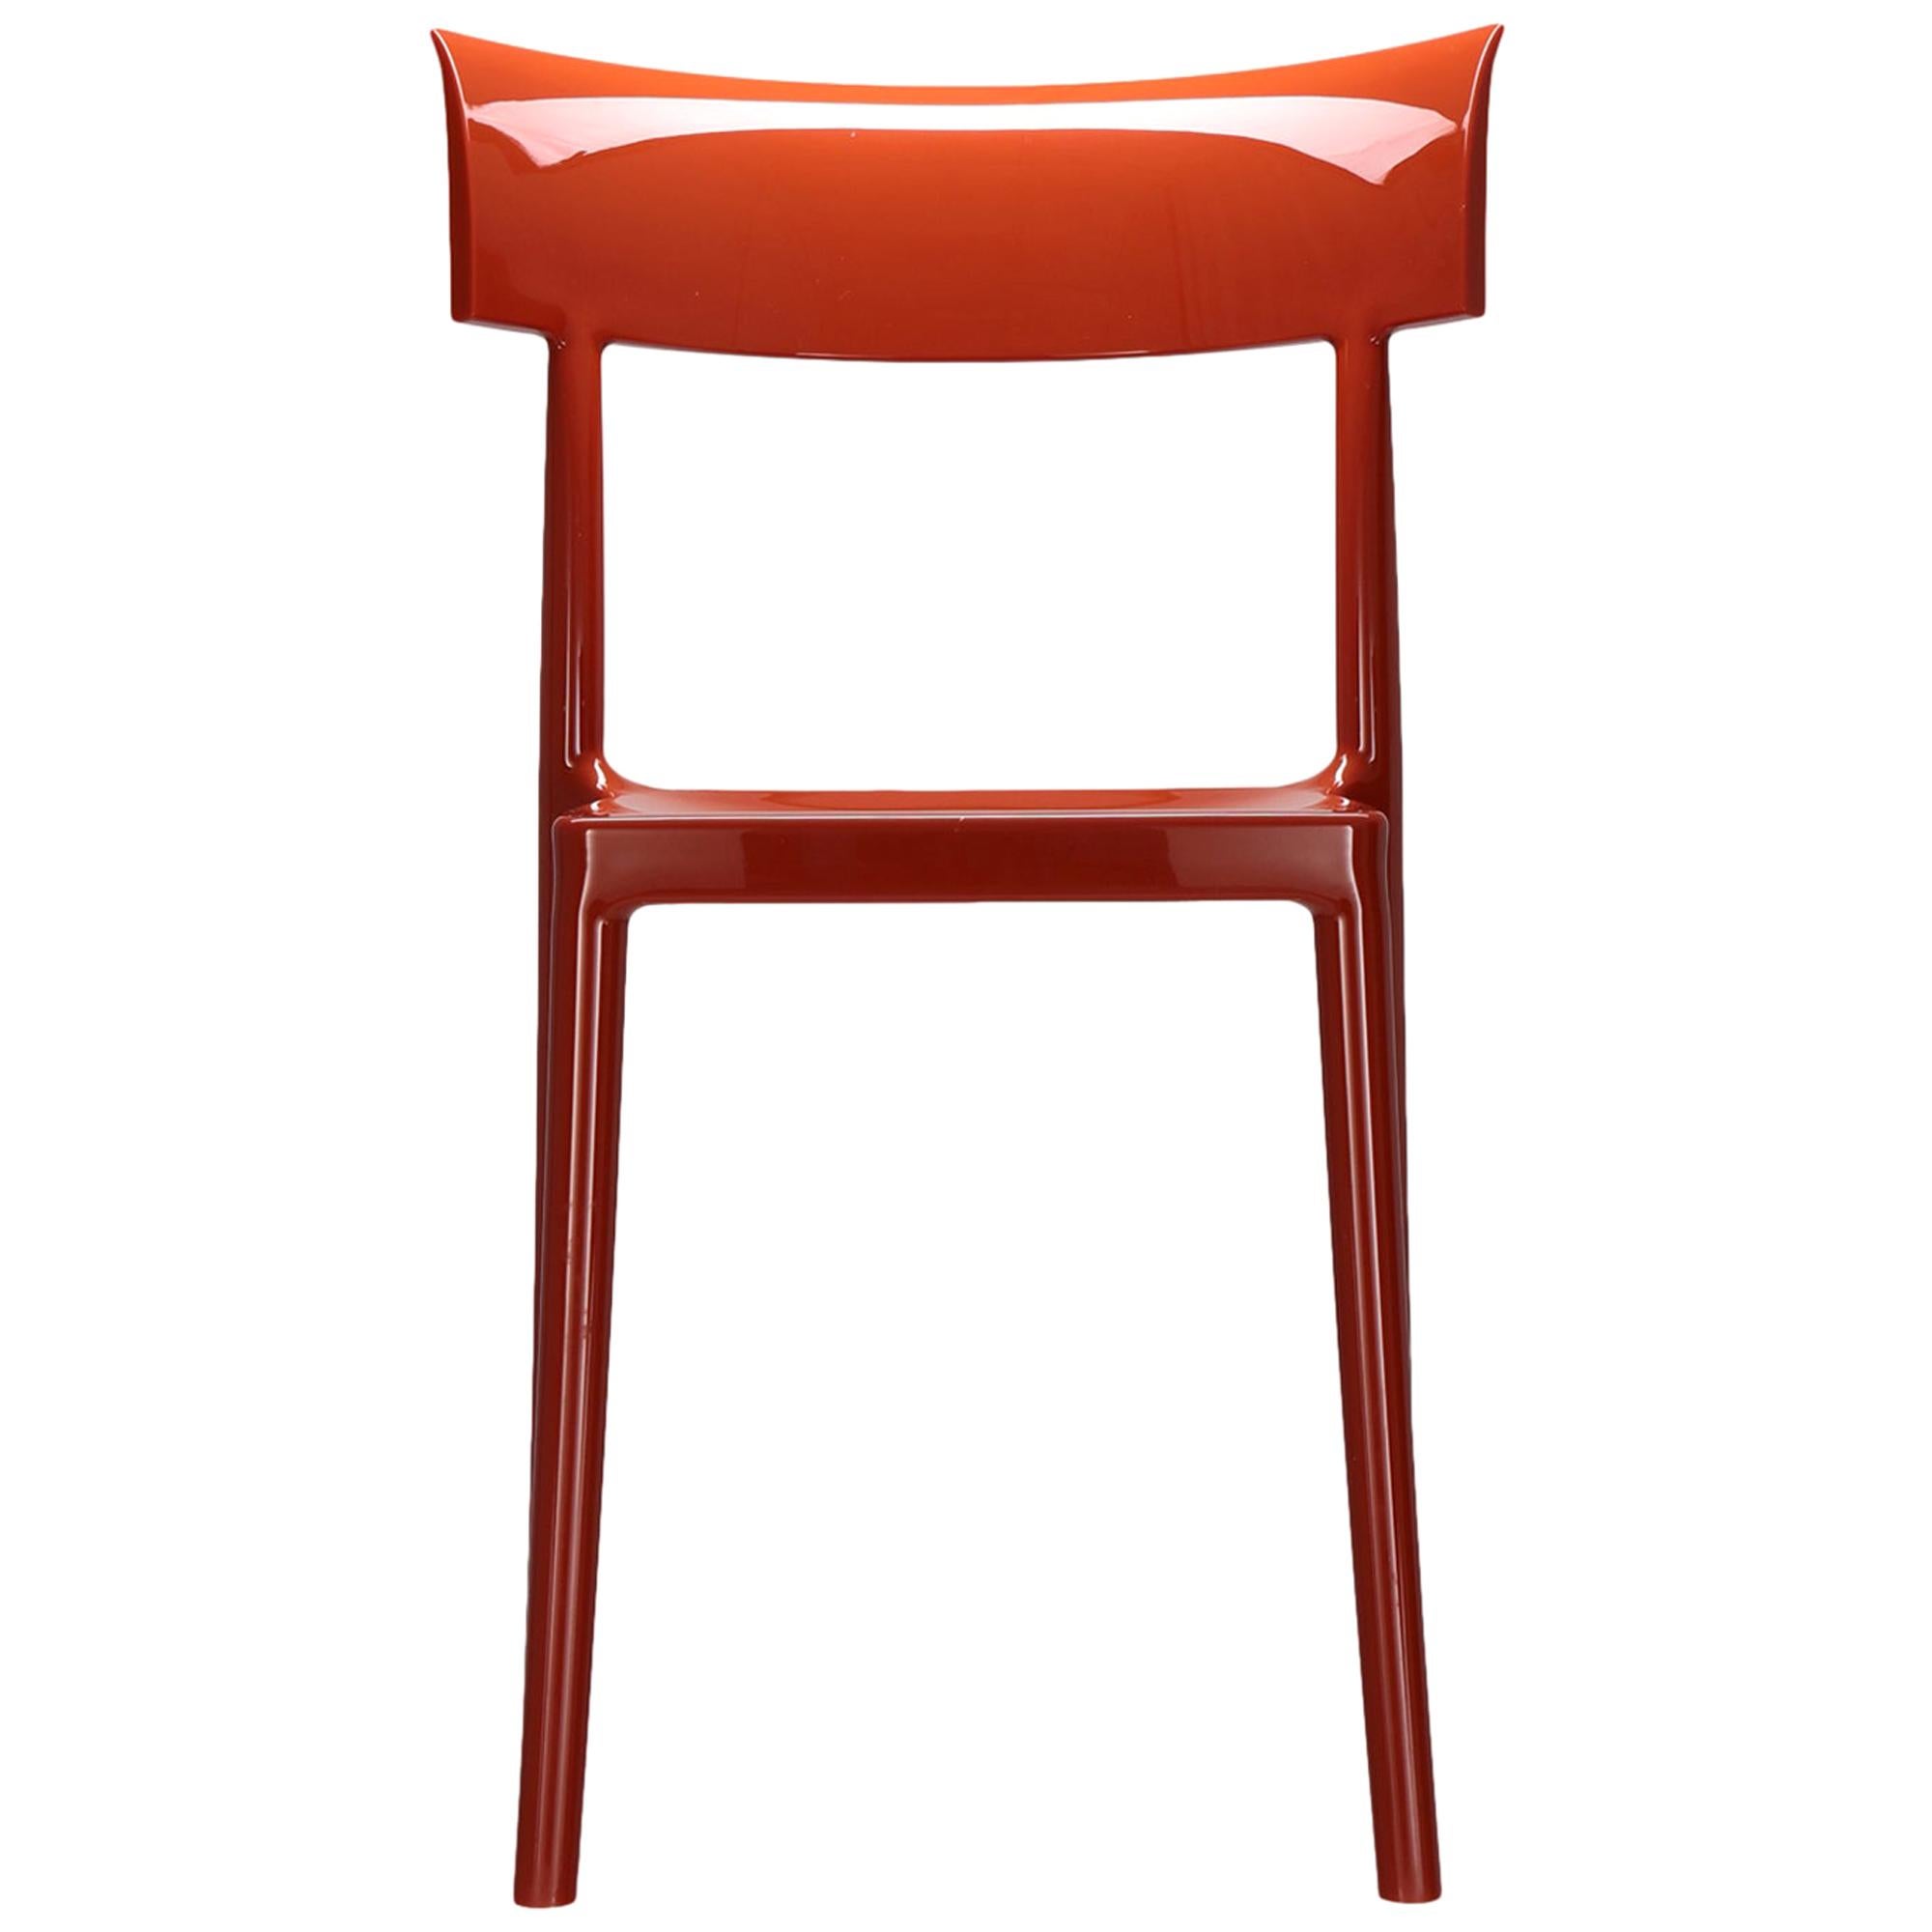 Kartell Cat Walk Chair in Rusty Orange by Philippe Starck with Sergio Schito